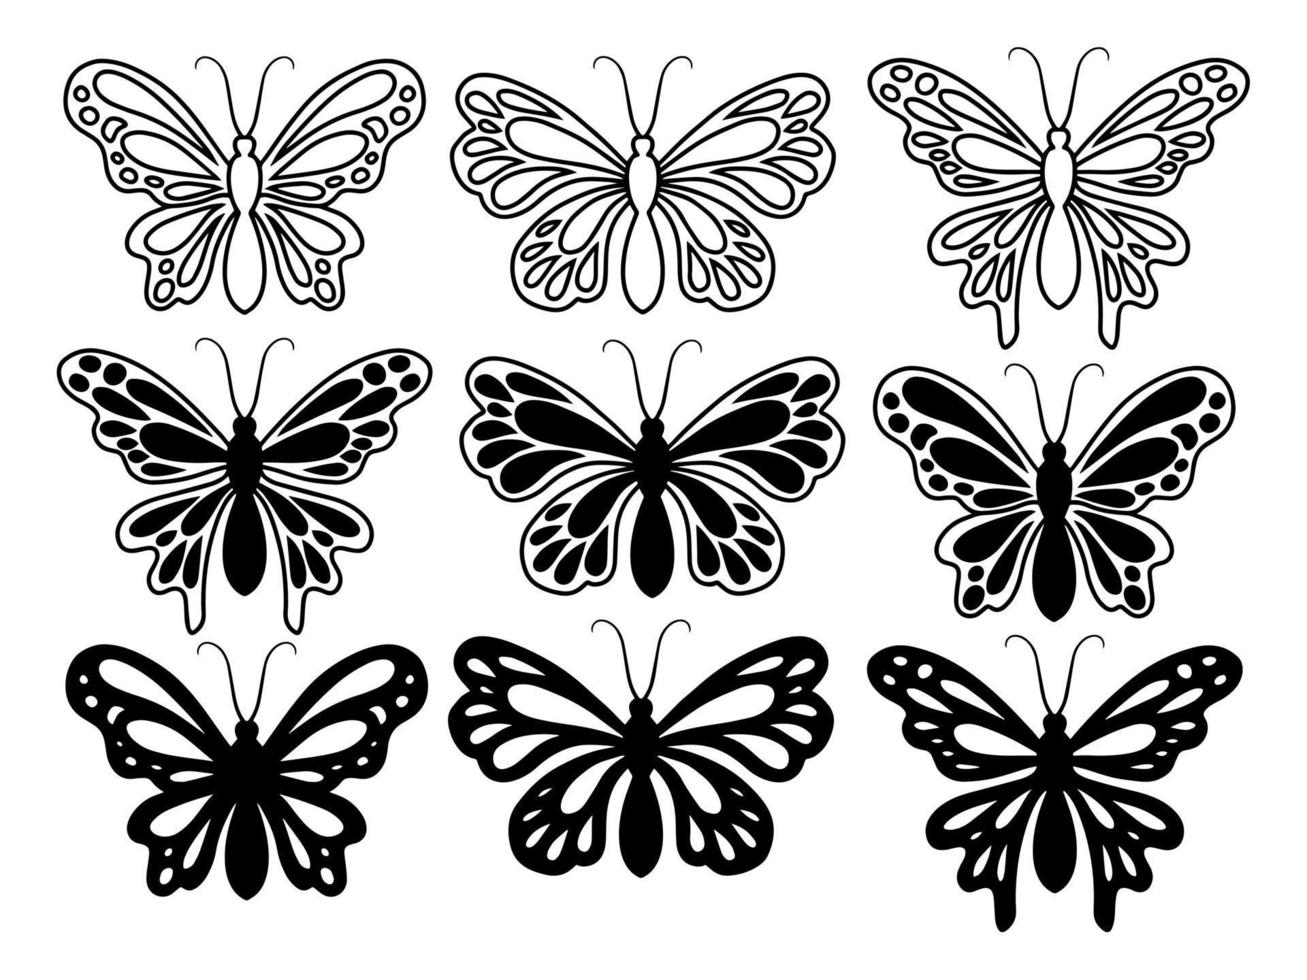 Butterfly Line Art Doodle Illustration vector